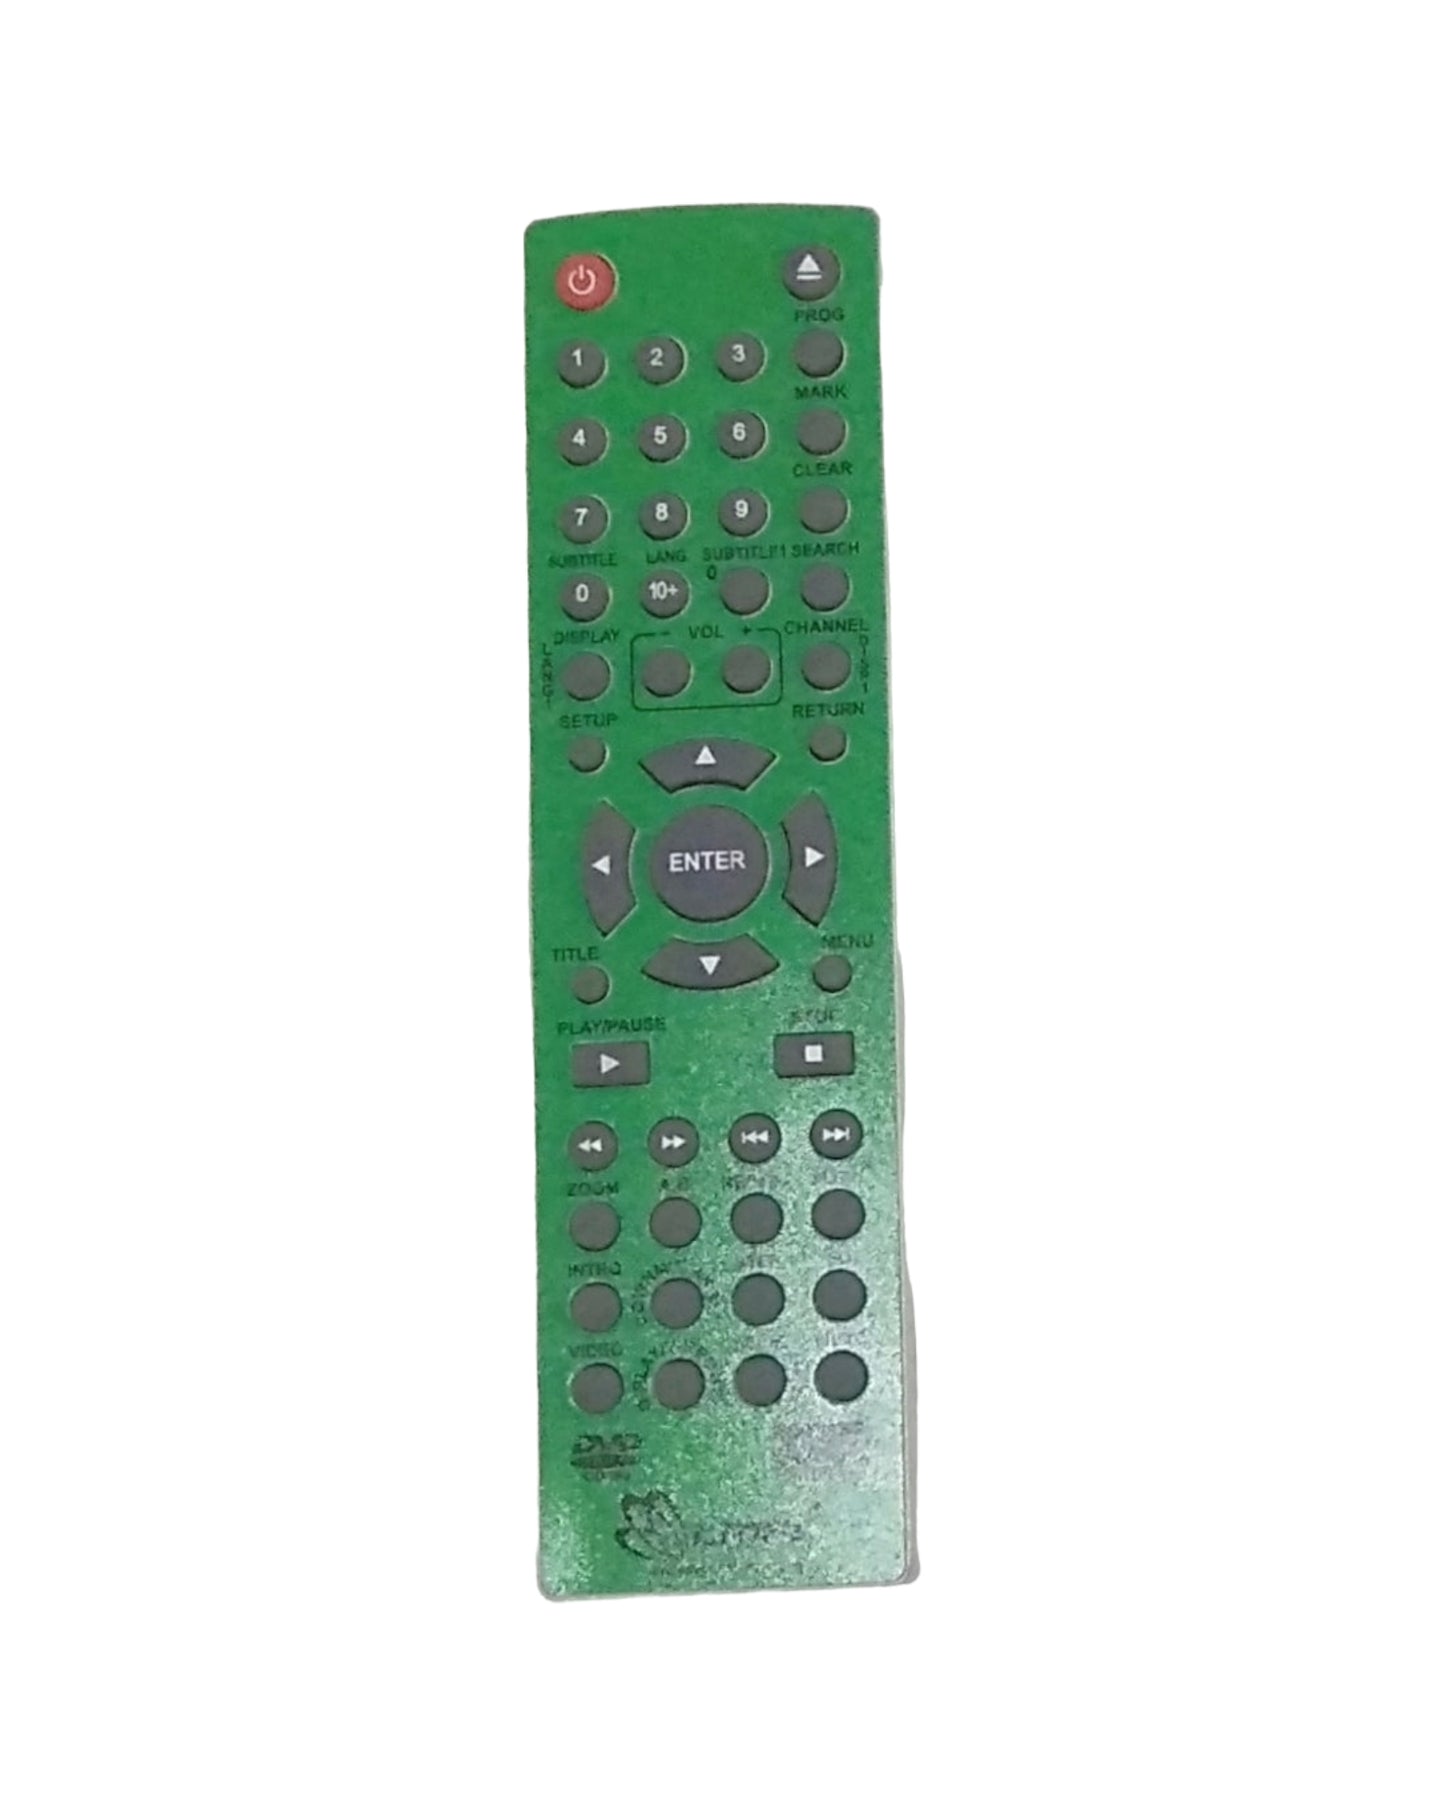 2 IN 1 dvd player remote control (DV10) *